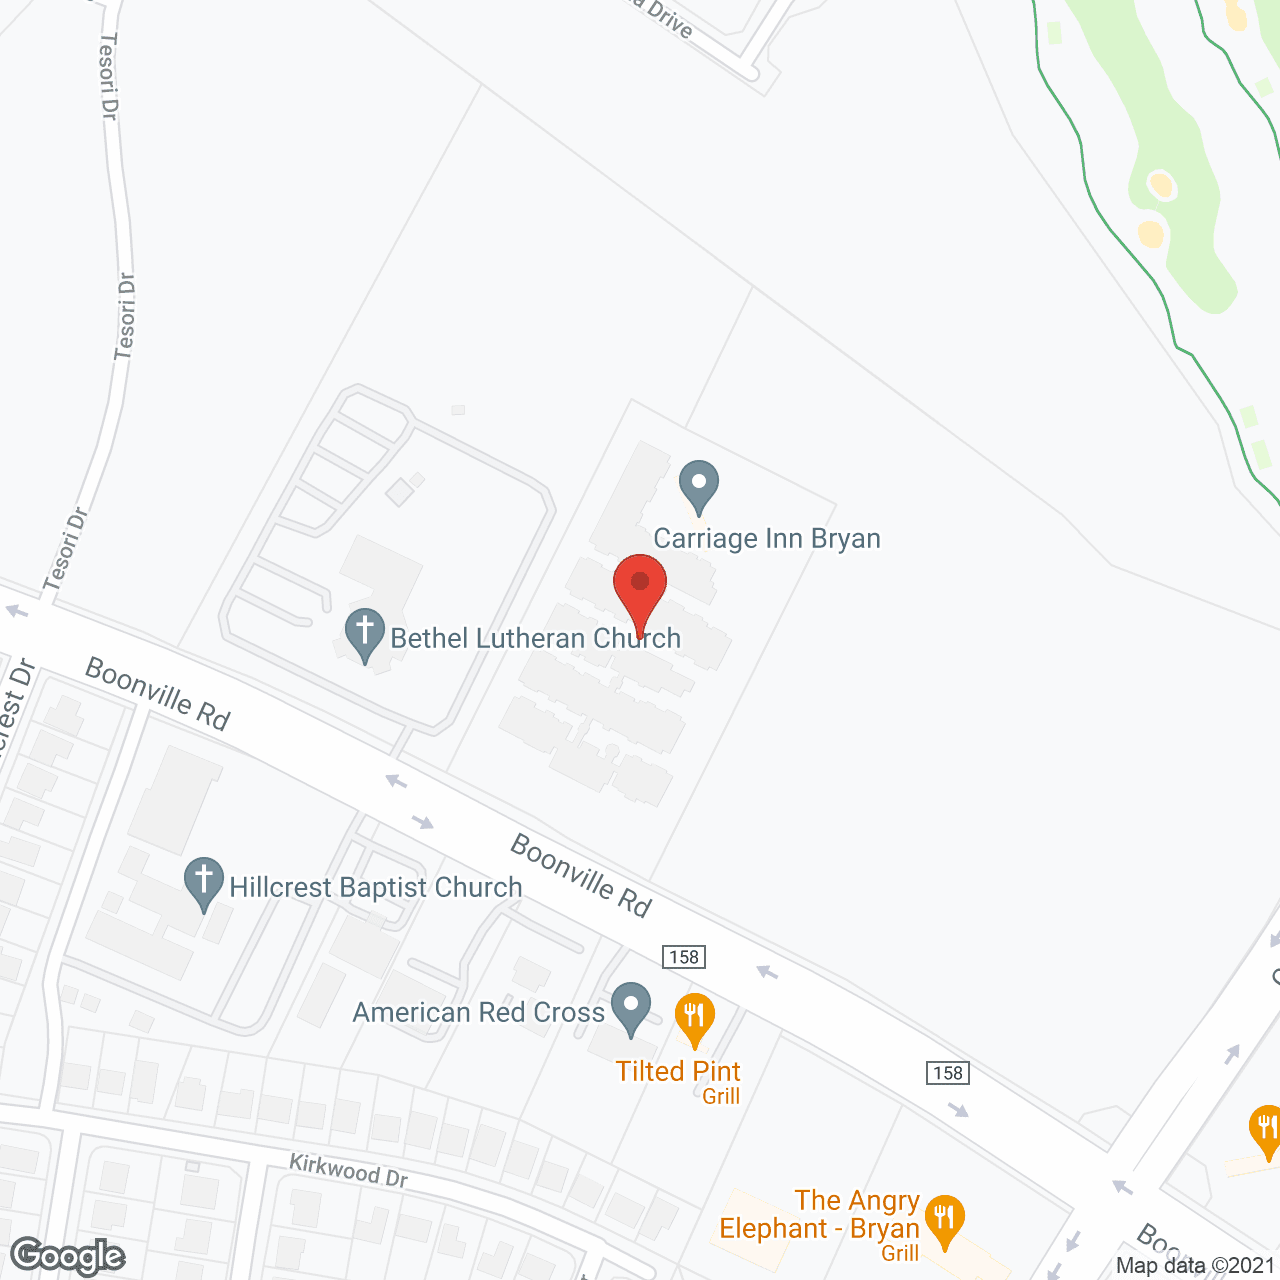 Carriage Inn at Bryan in google map